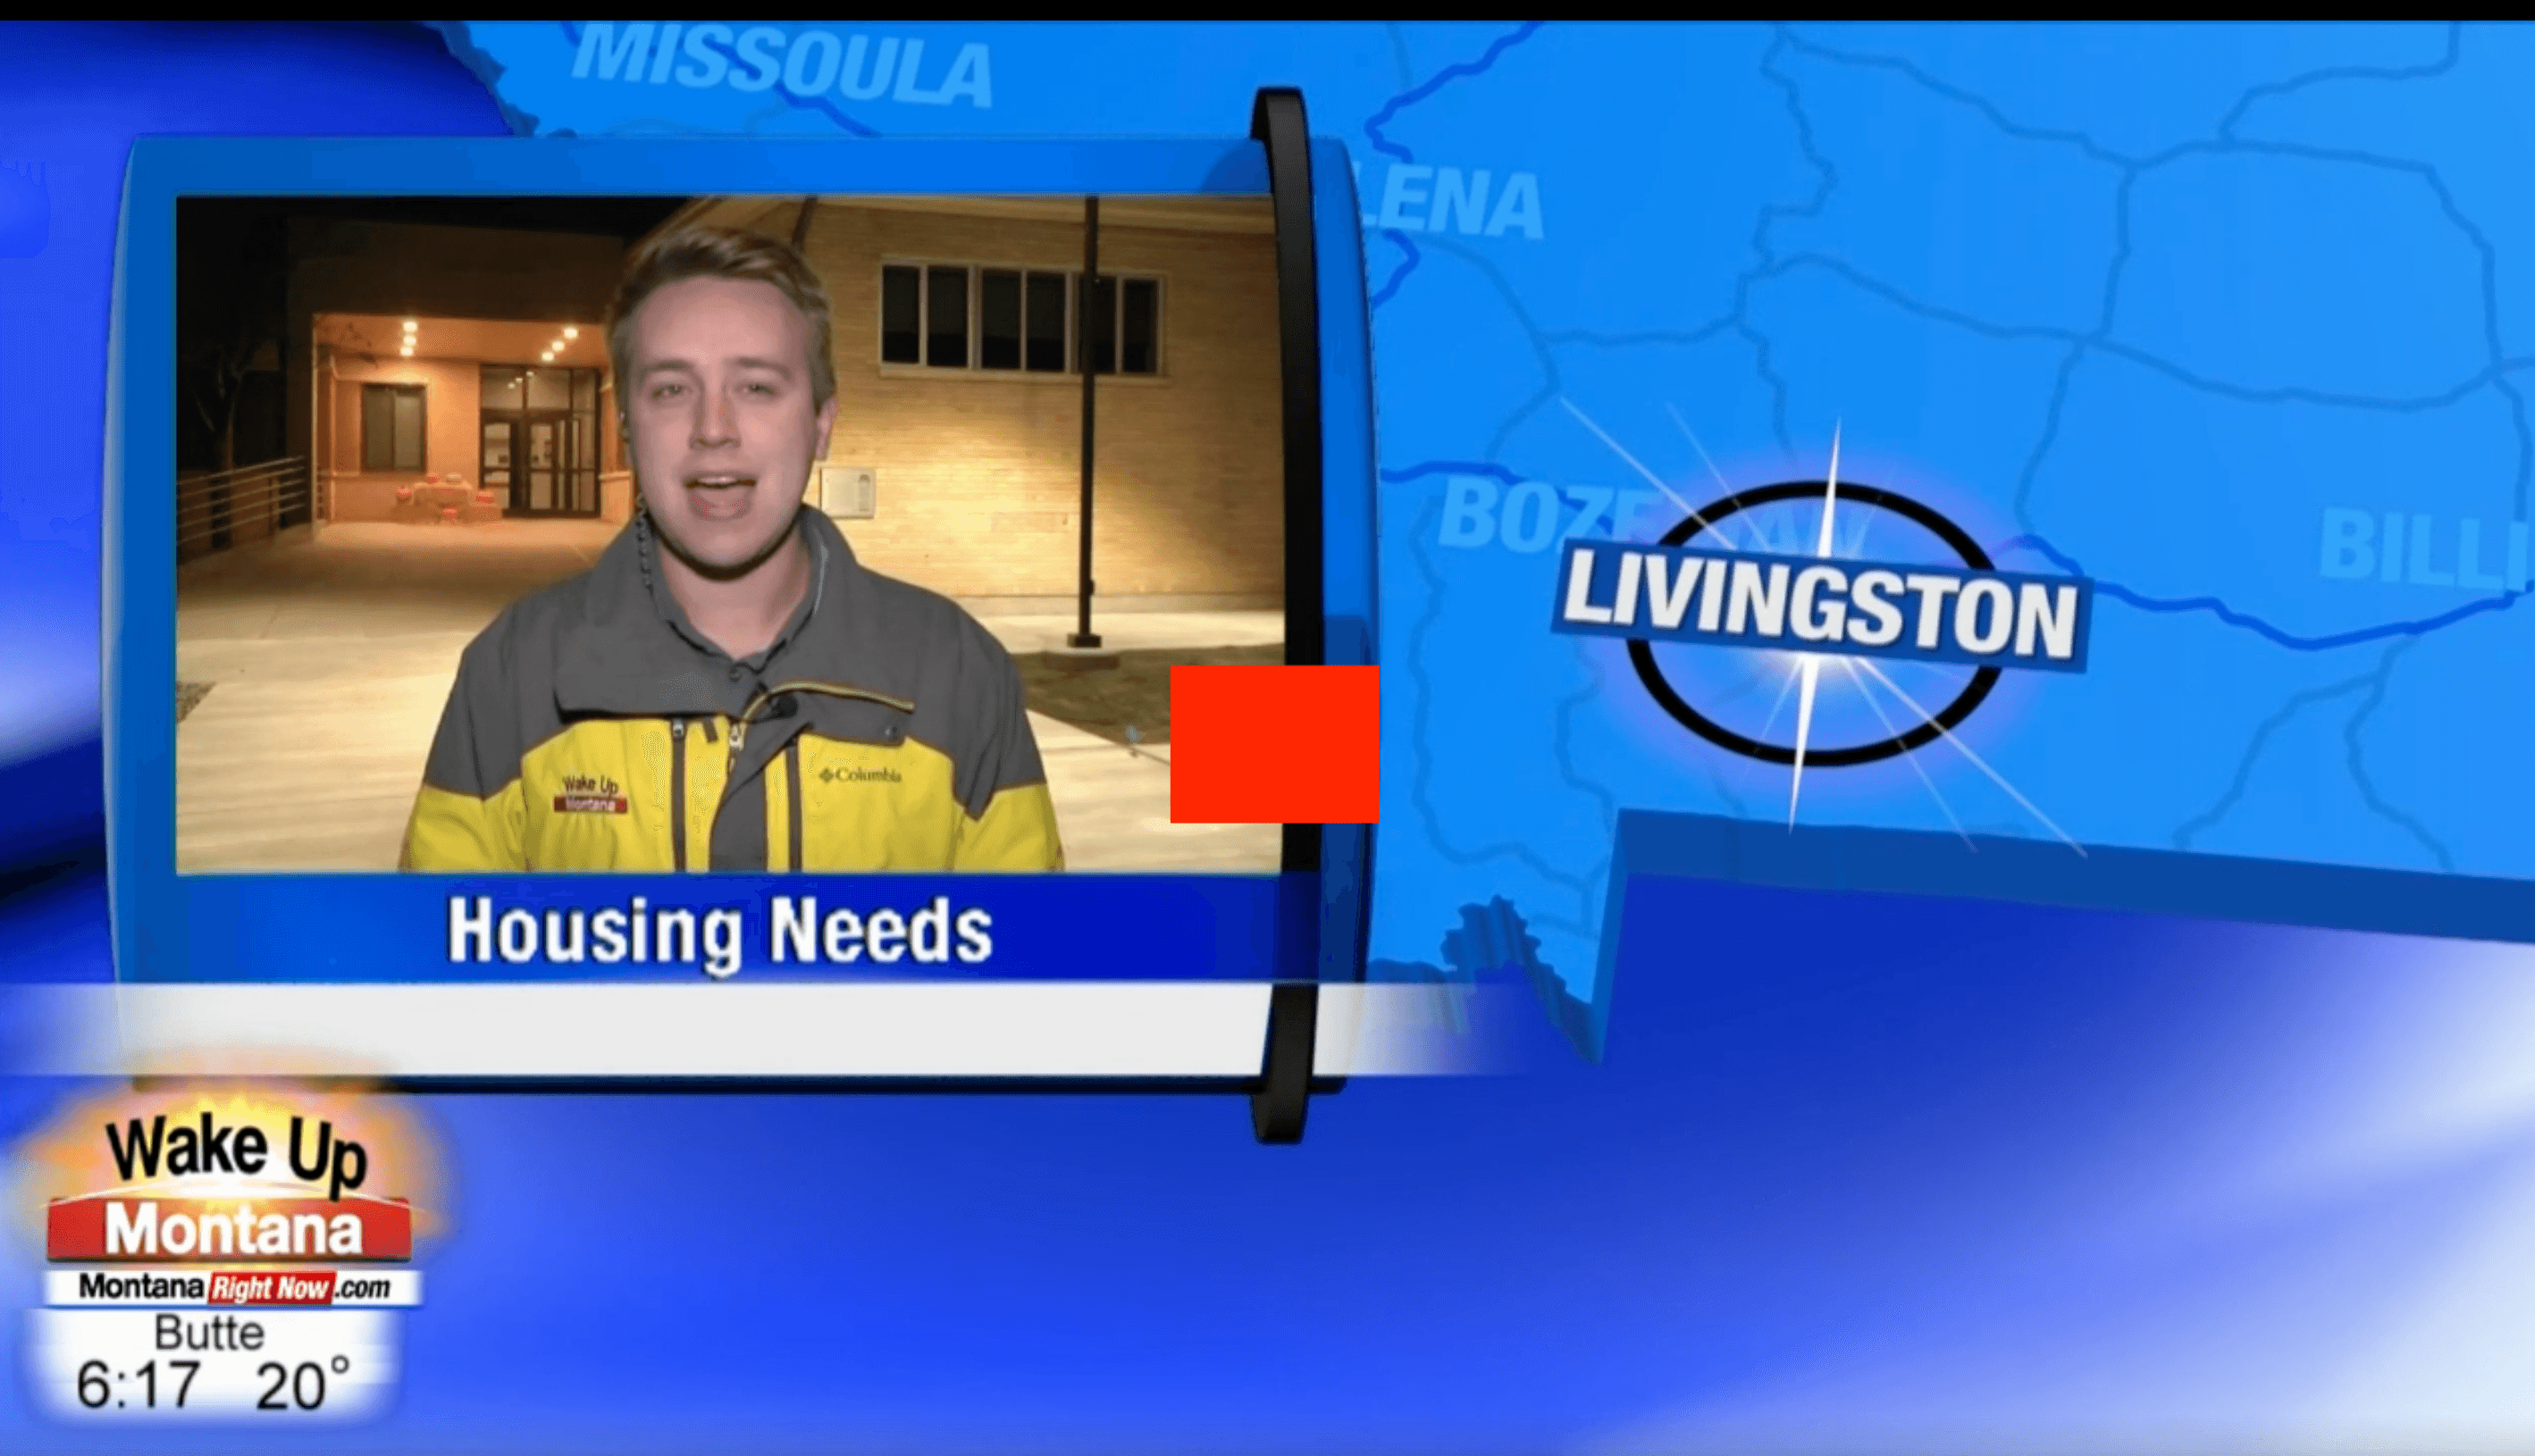 Park County Community Foundation featured on network news regarding Housing Needs Assessment